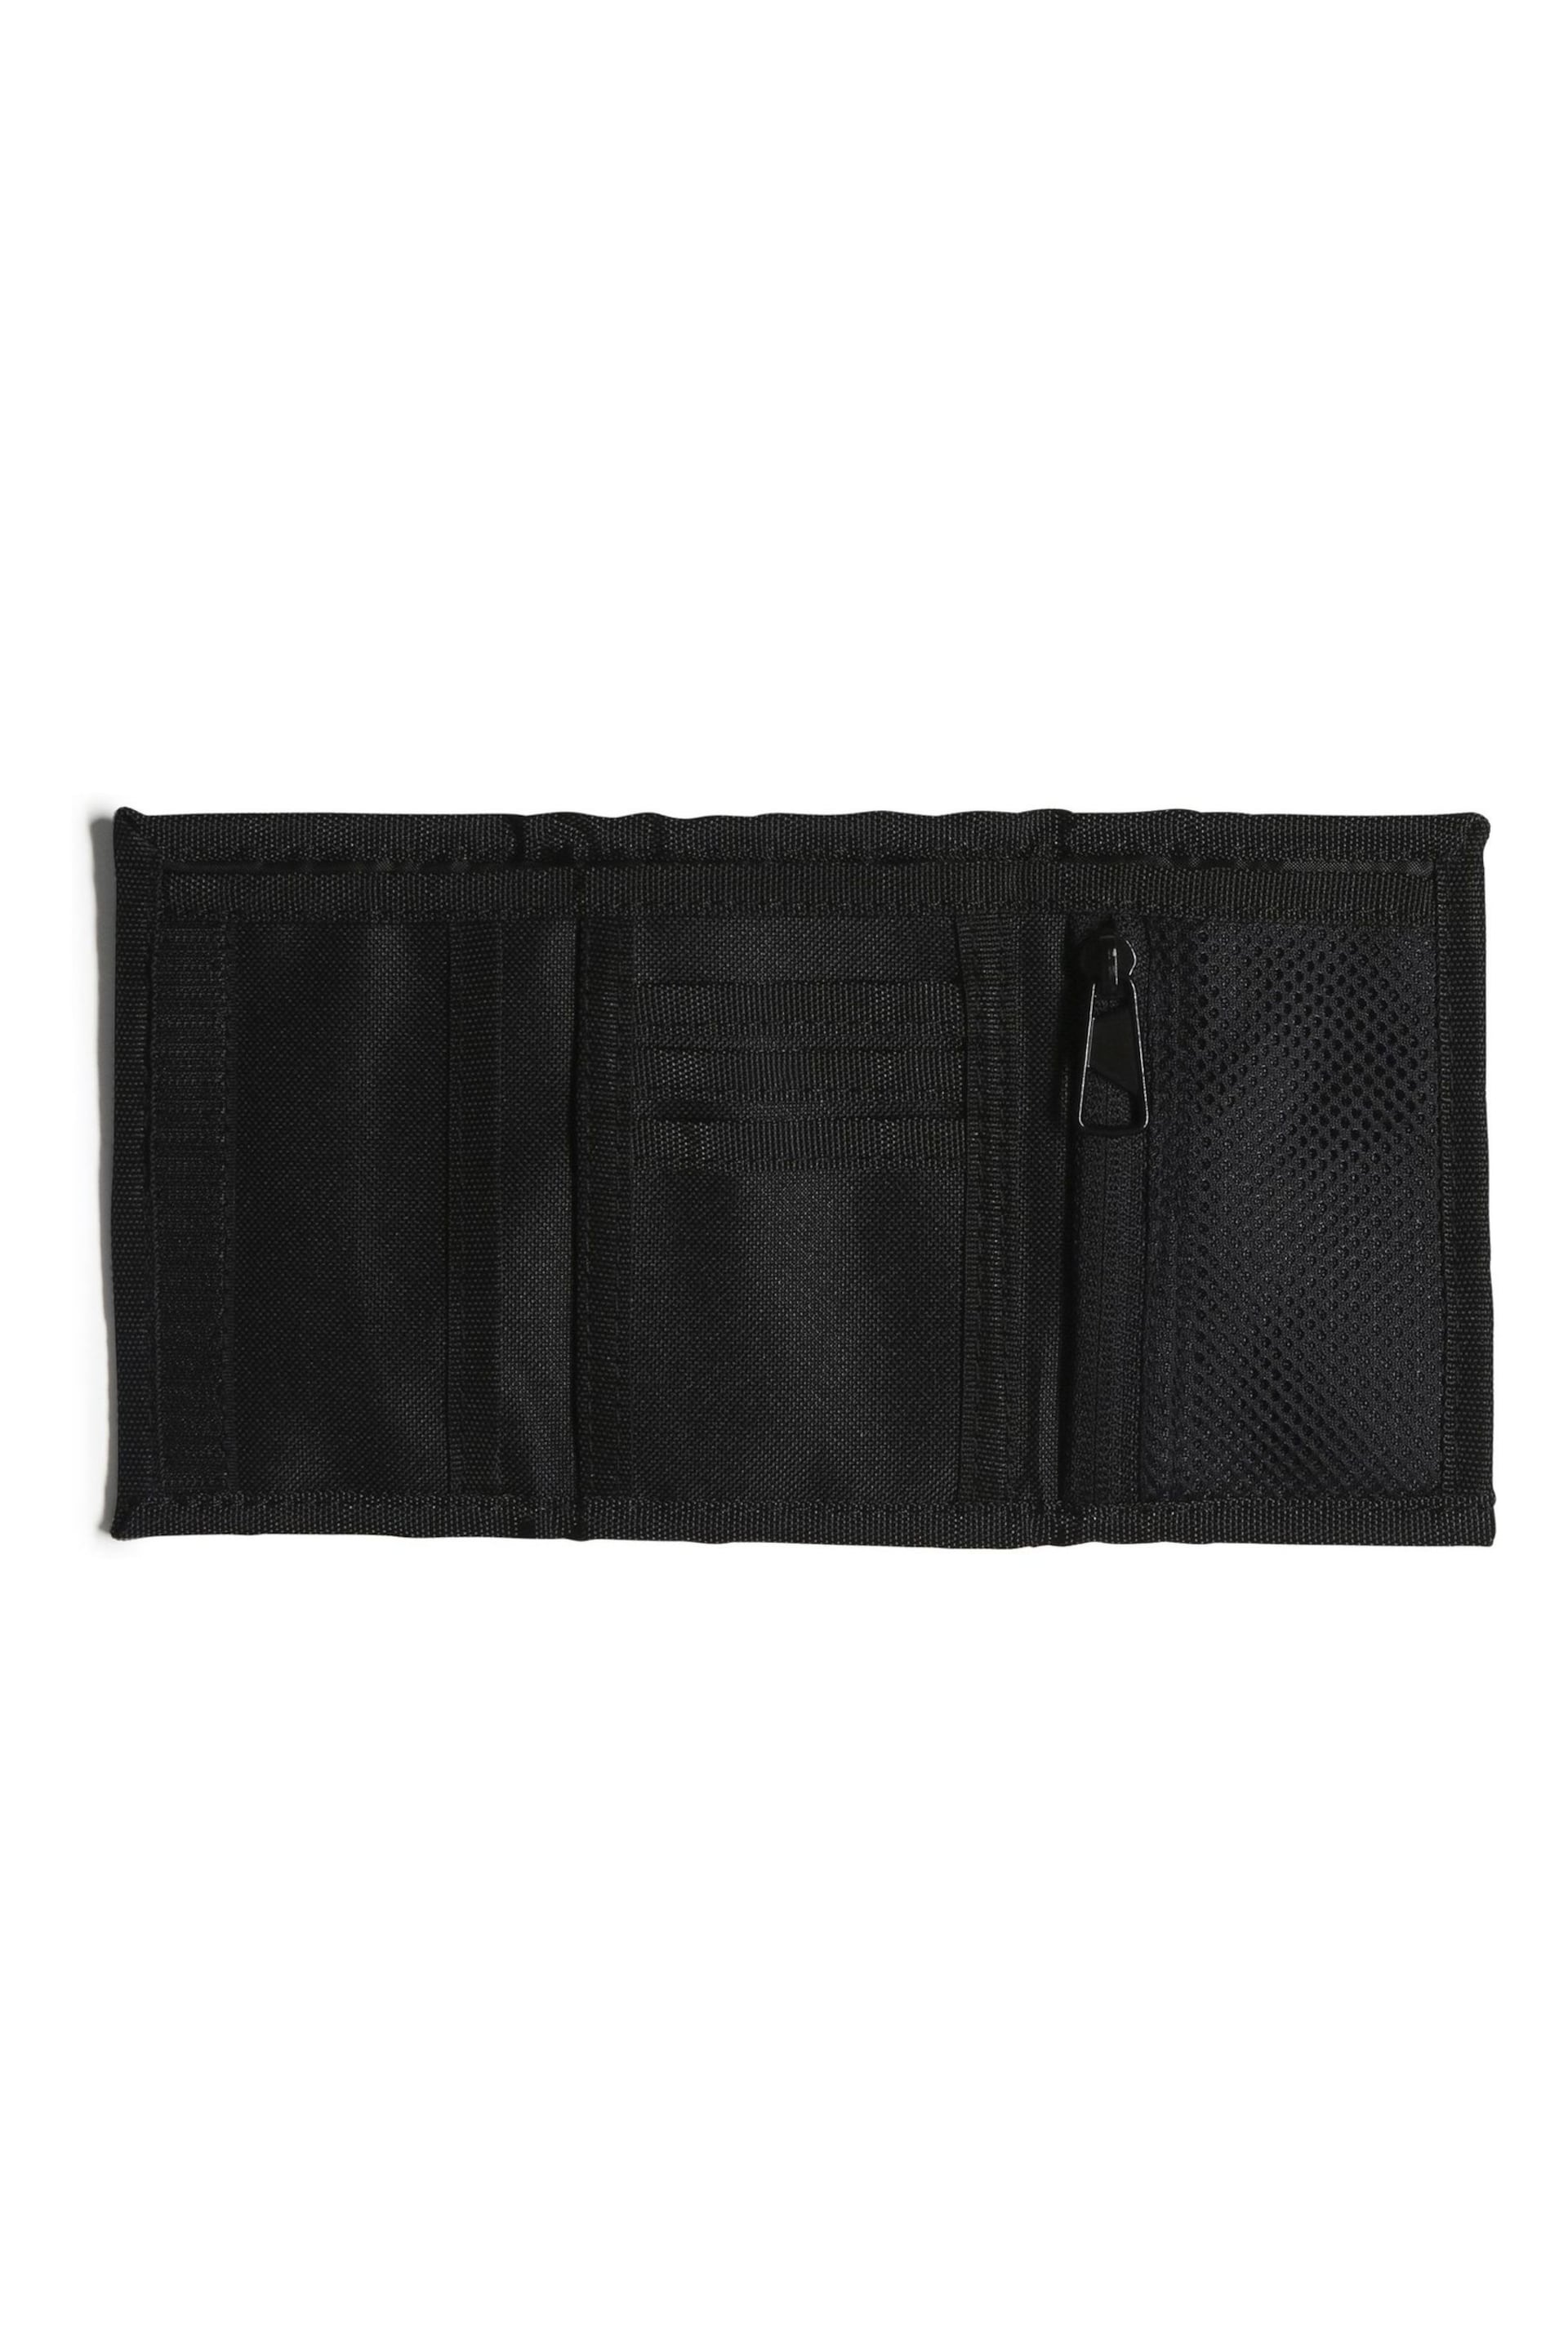 adidas Black Essentials Training Wallet - Image 3 of 5